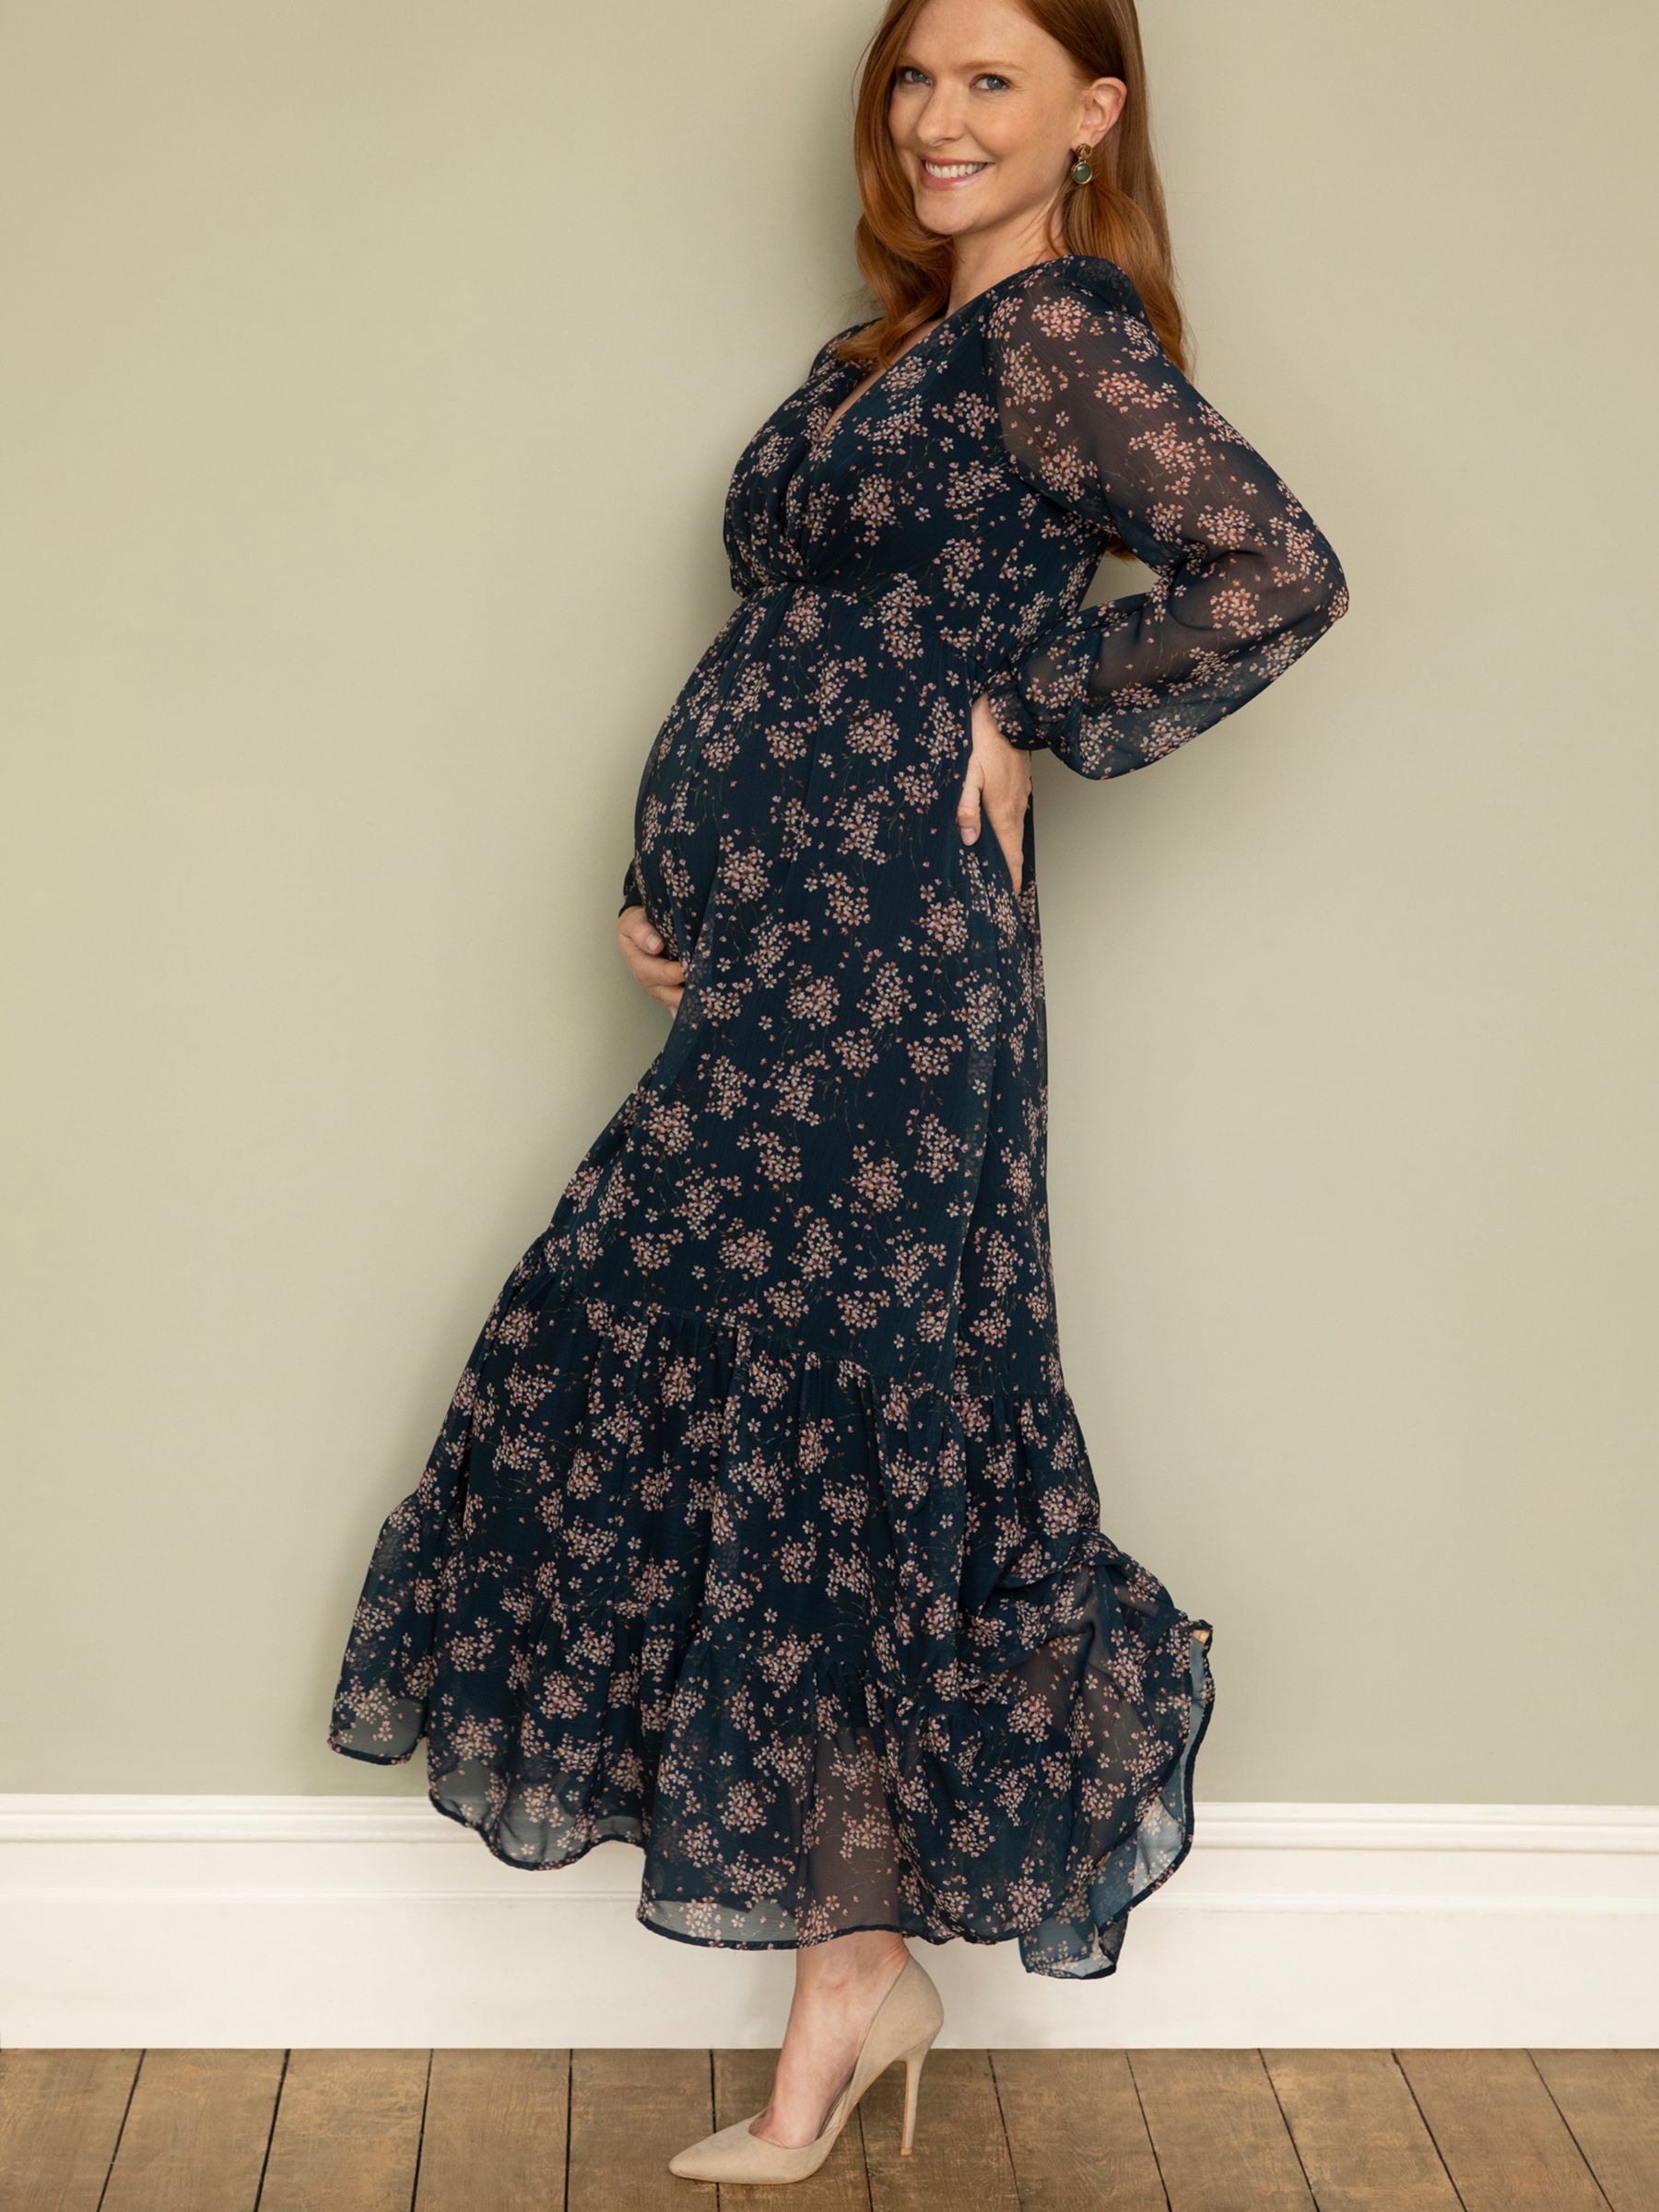 Tiffany Rose Maternity Bella Maxi Dress, Ditsy Navy Floral, 6-8